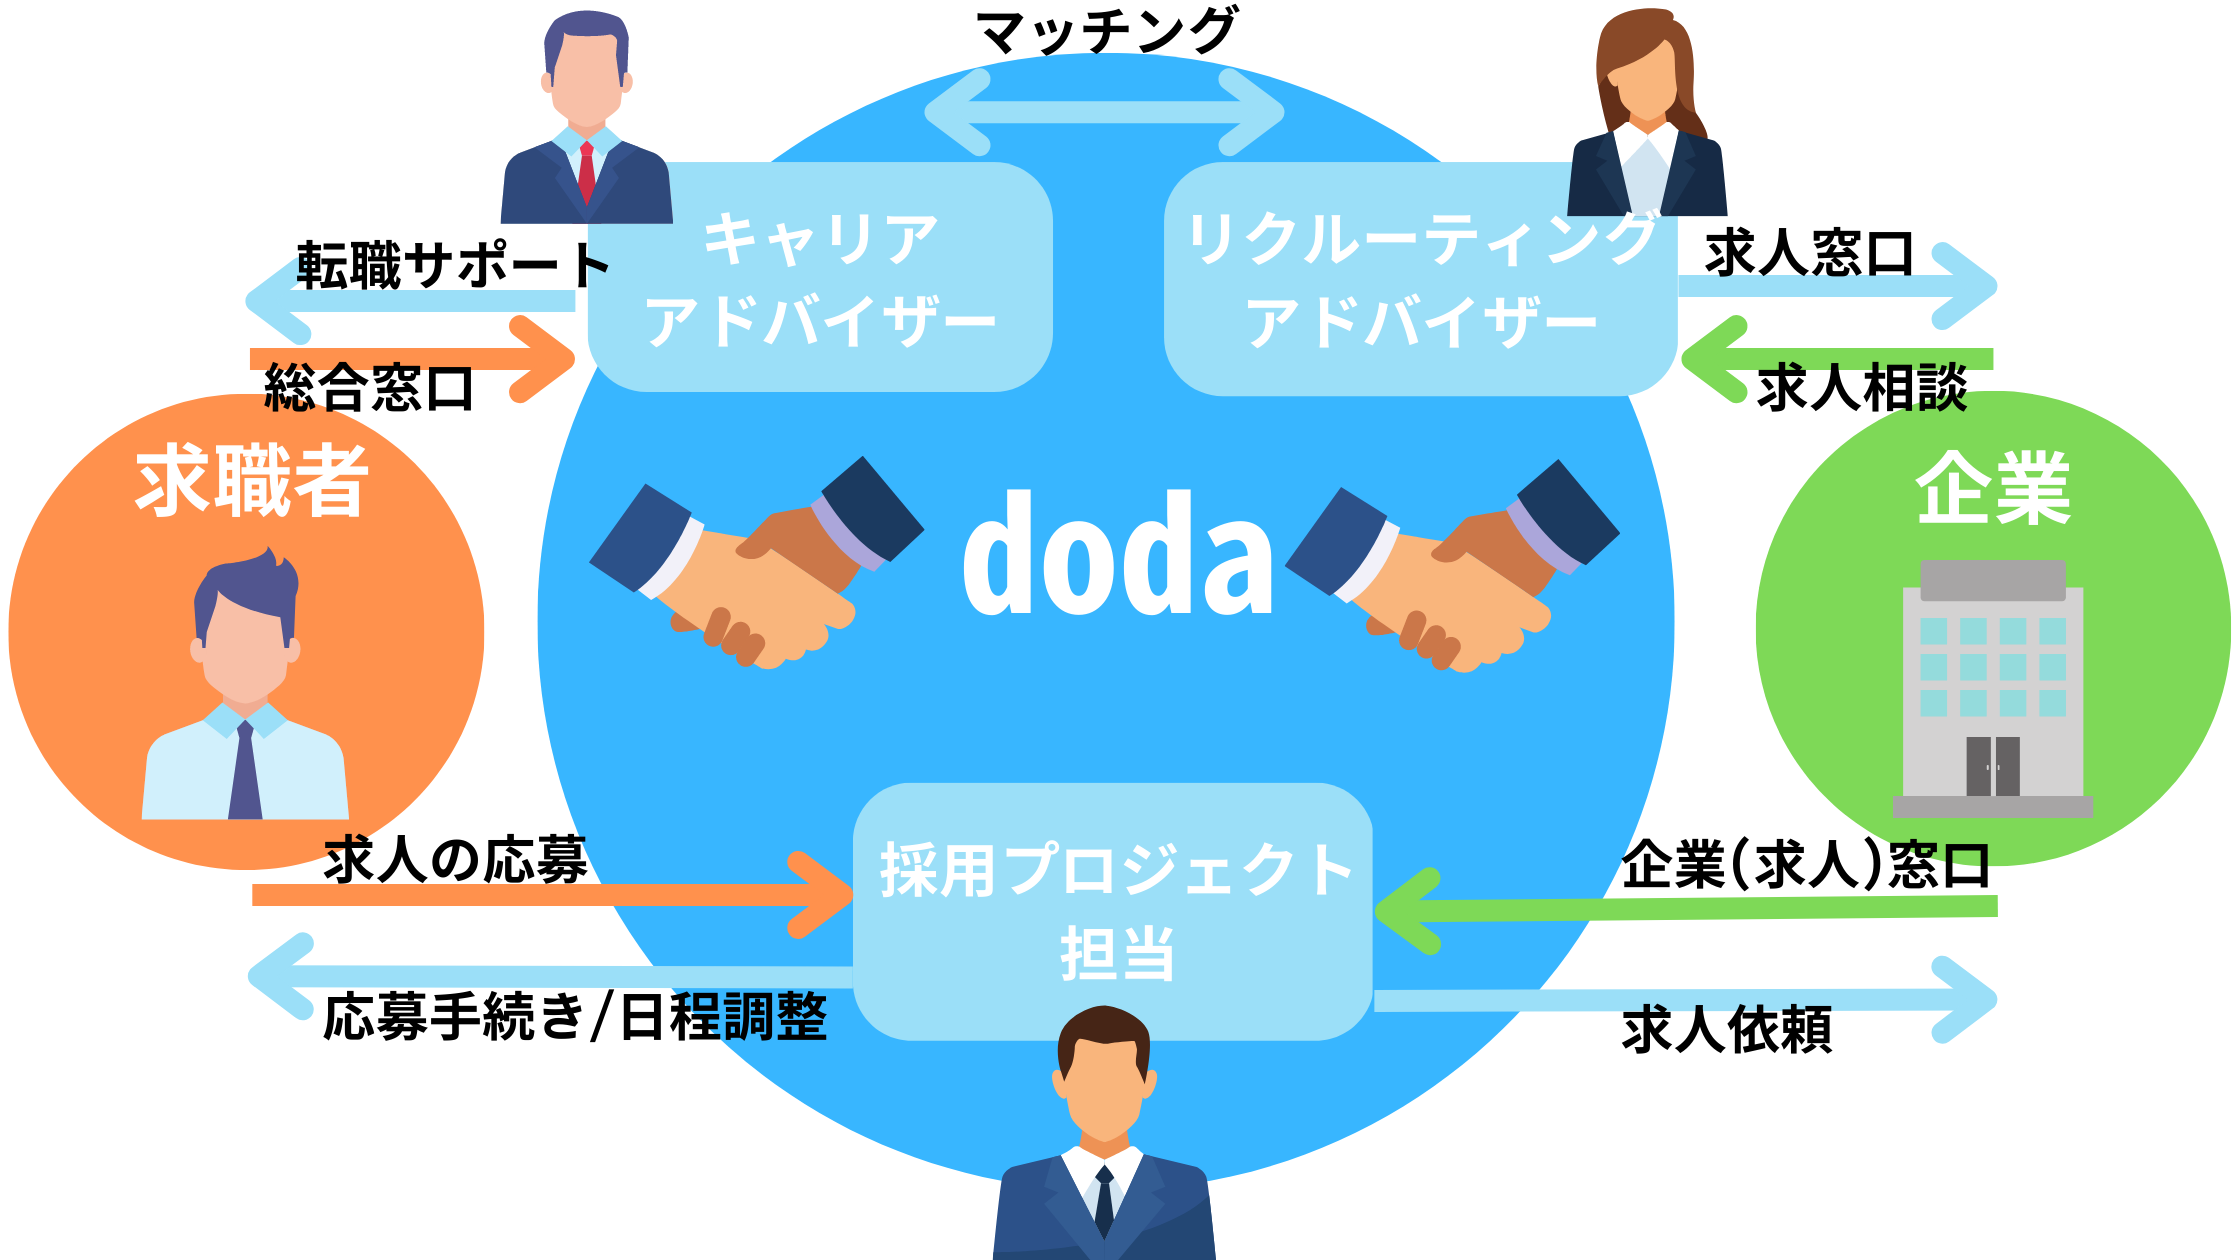 doda-career-change-service